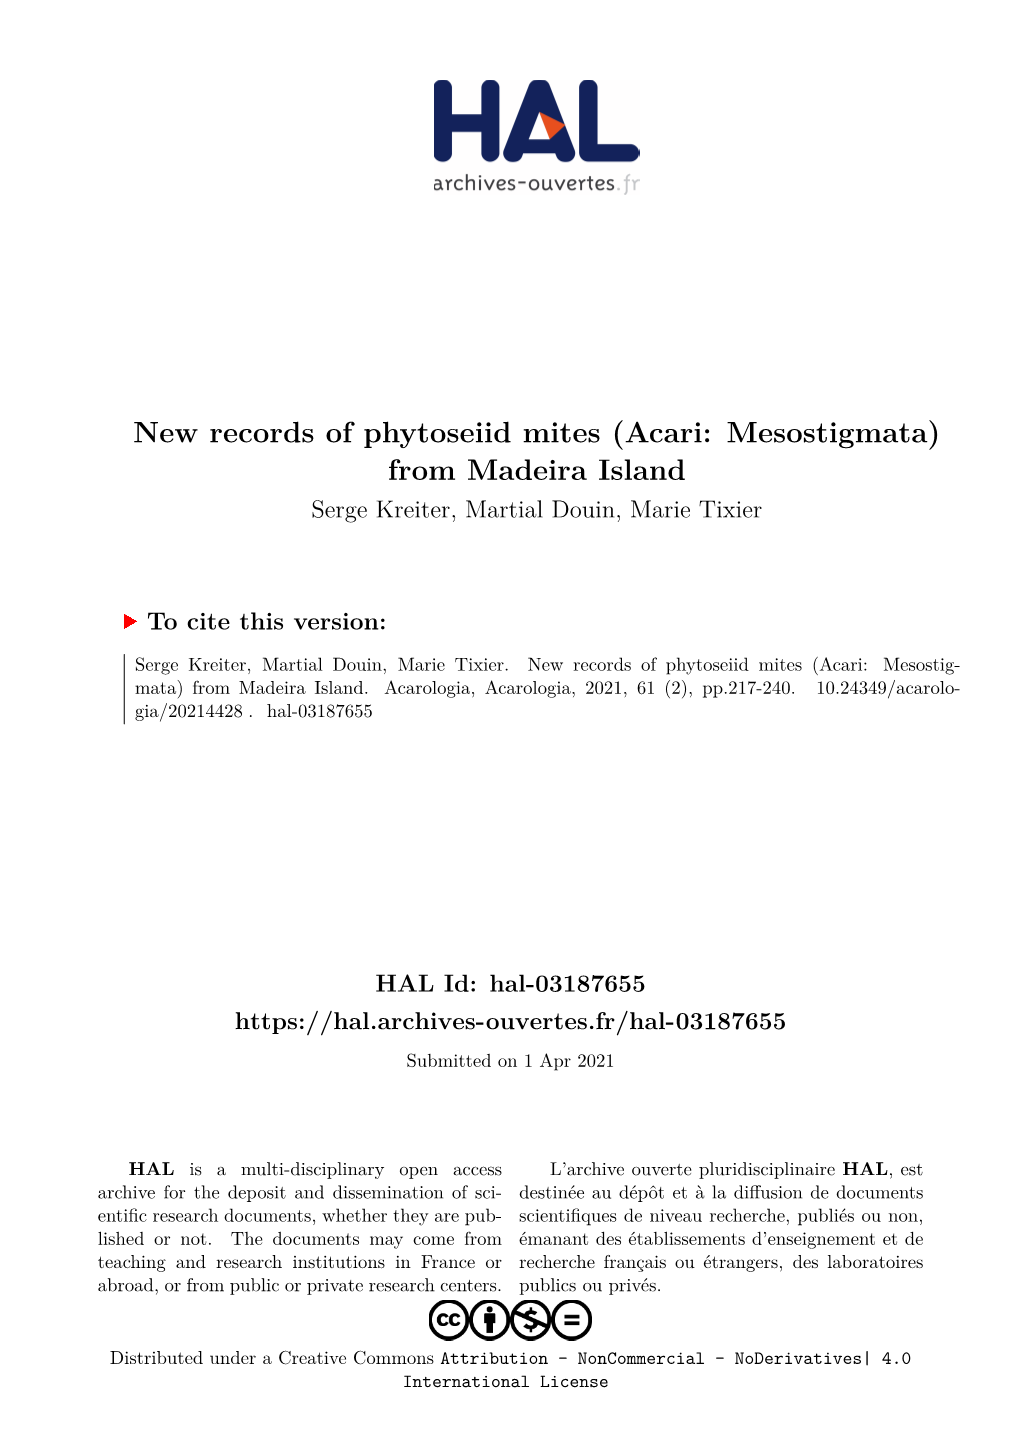 New Records of Phytoseiid Mites (Acari: Mesostigmata) from Madeira Island Serge Kreiter, Martial Douin, Marie Tixier